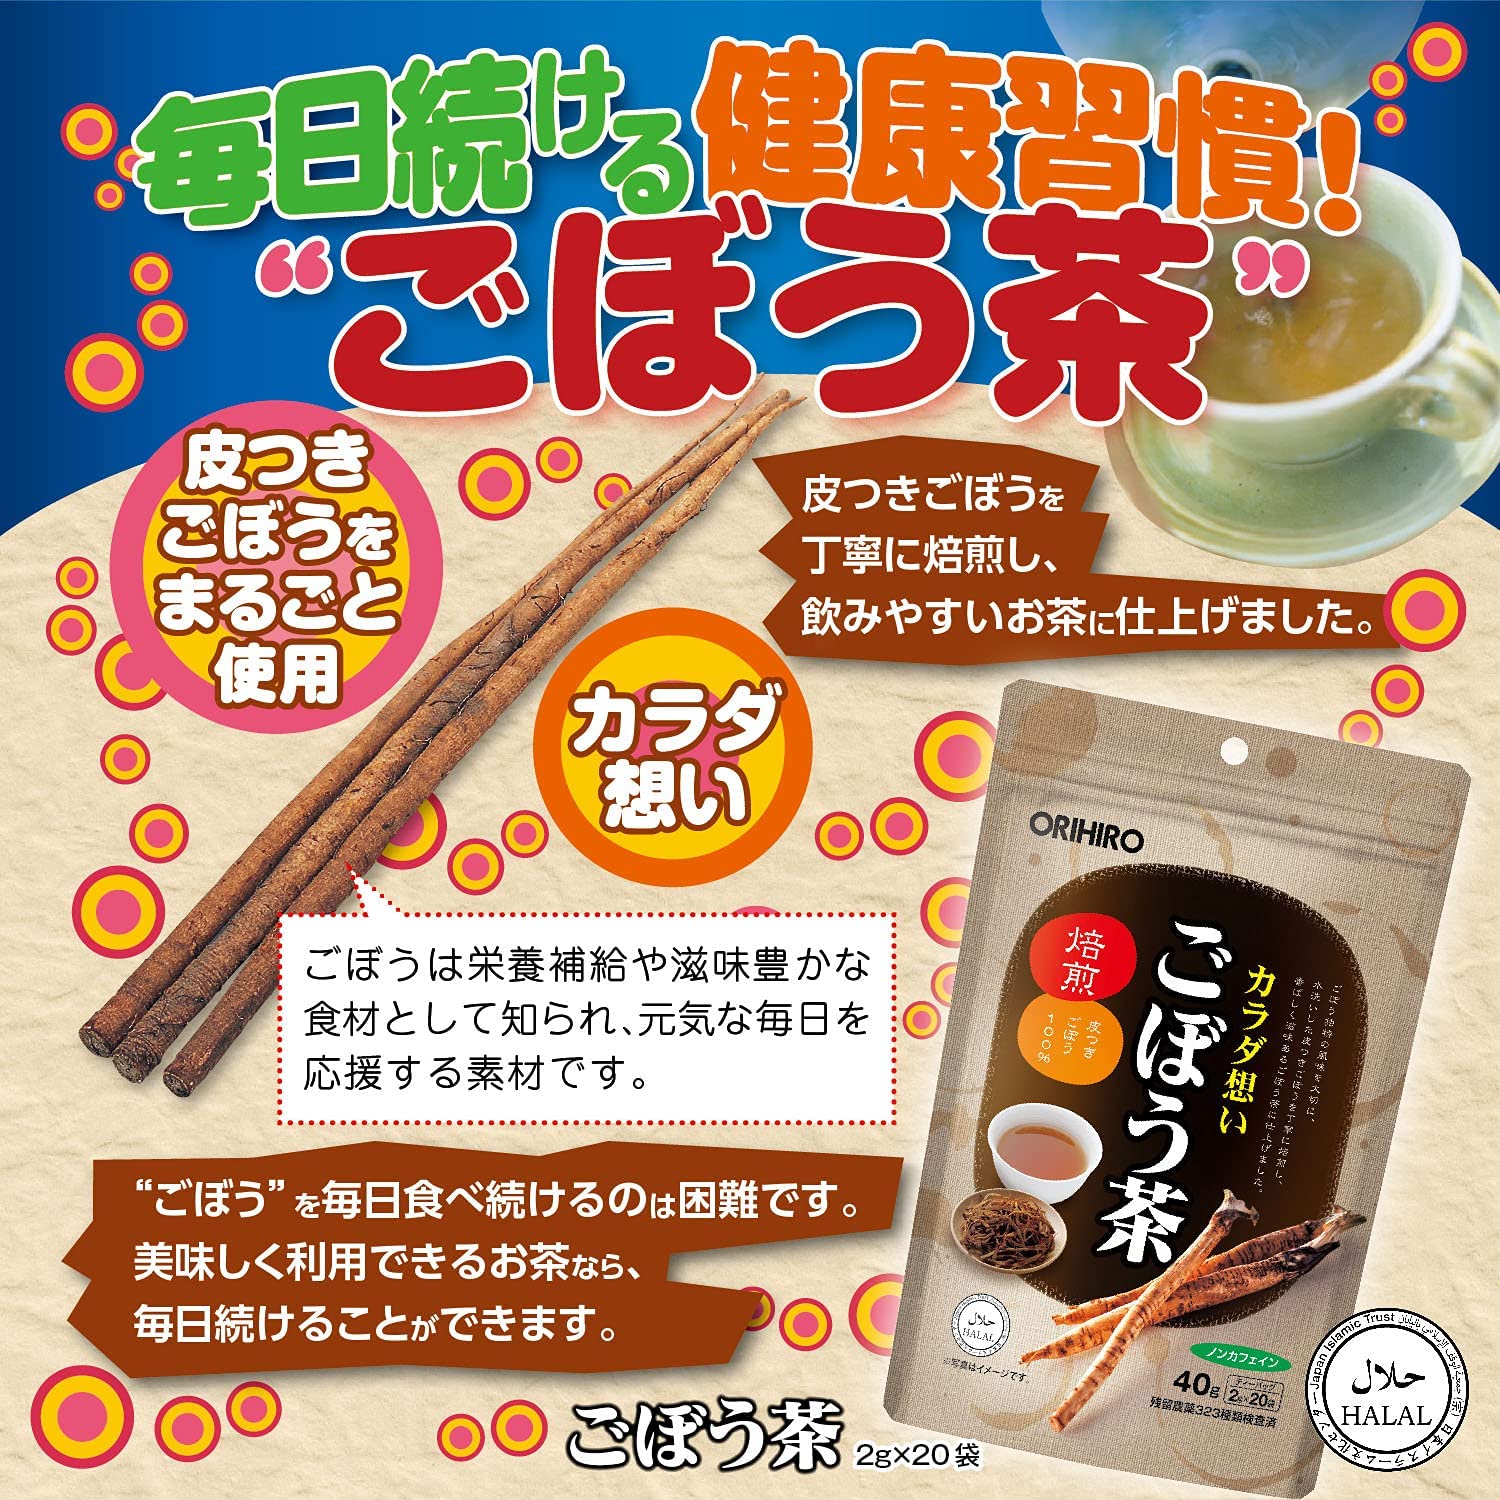 Orihiro diet burdock tea 2g x 20 packets